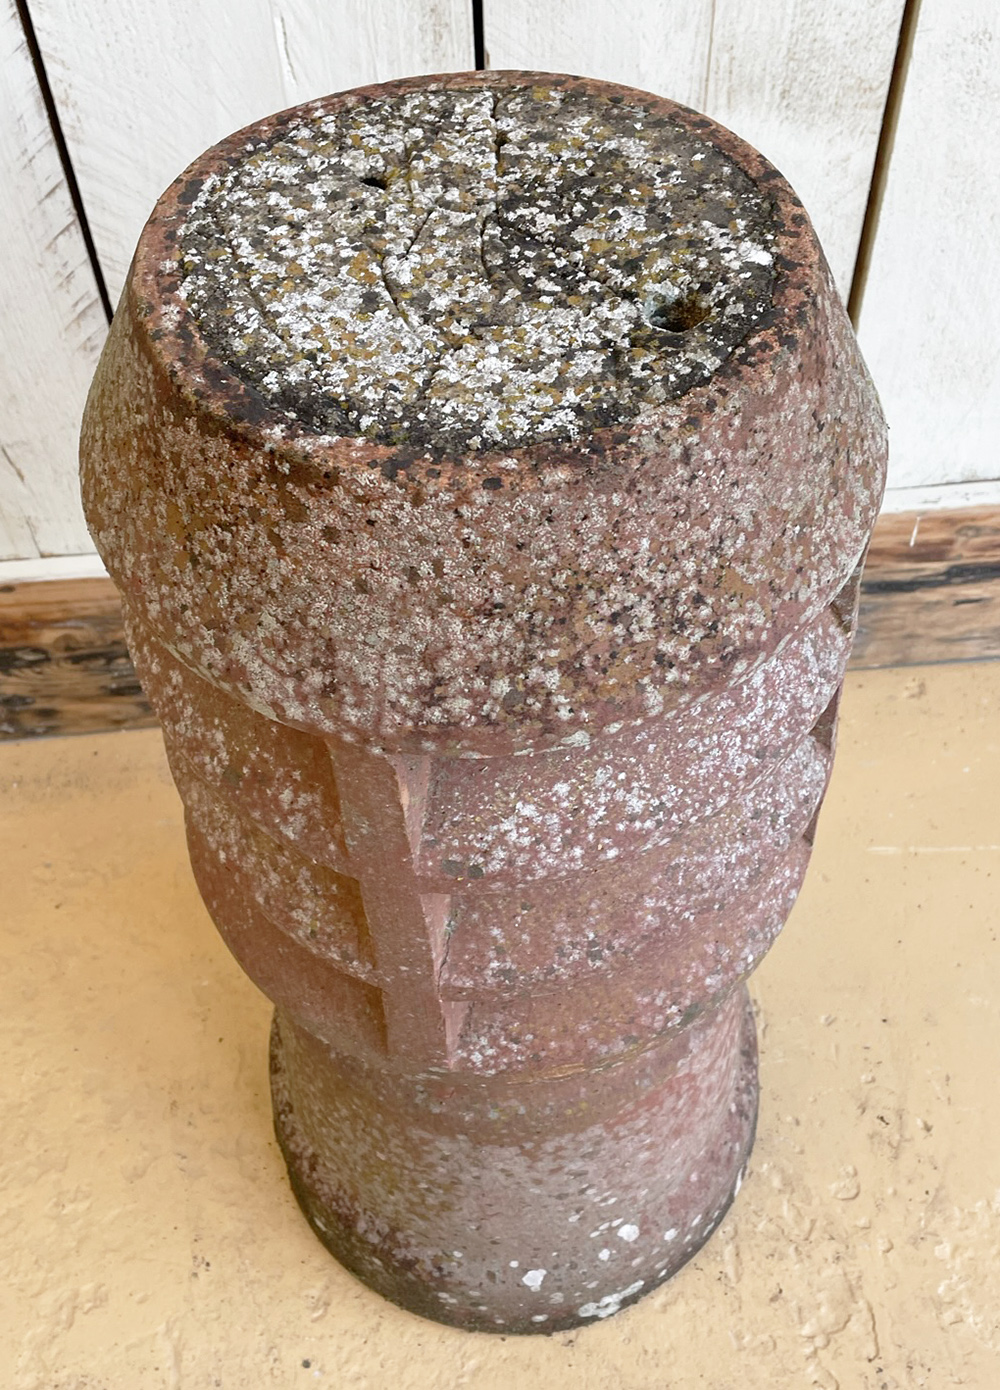 Conc cap top | Decorative Chimney Pot with Vents